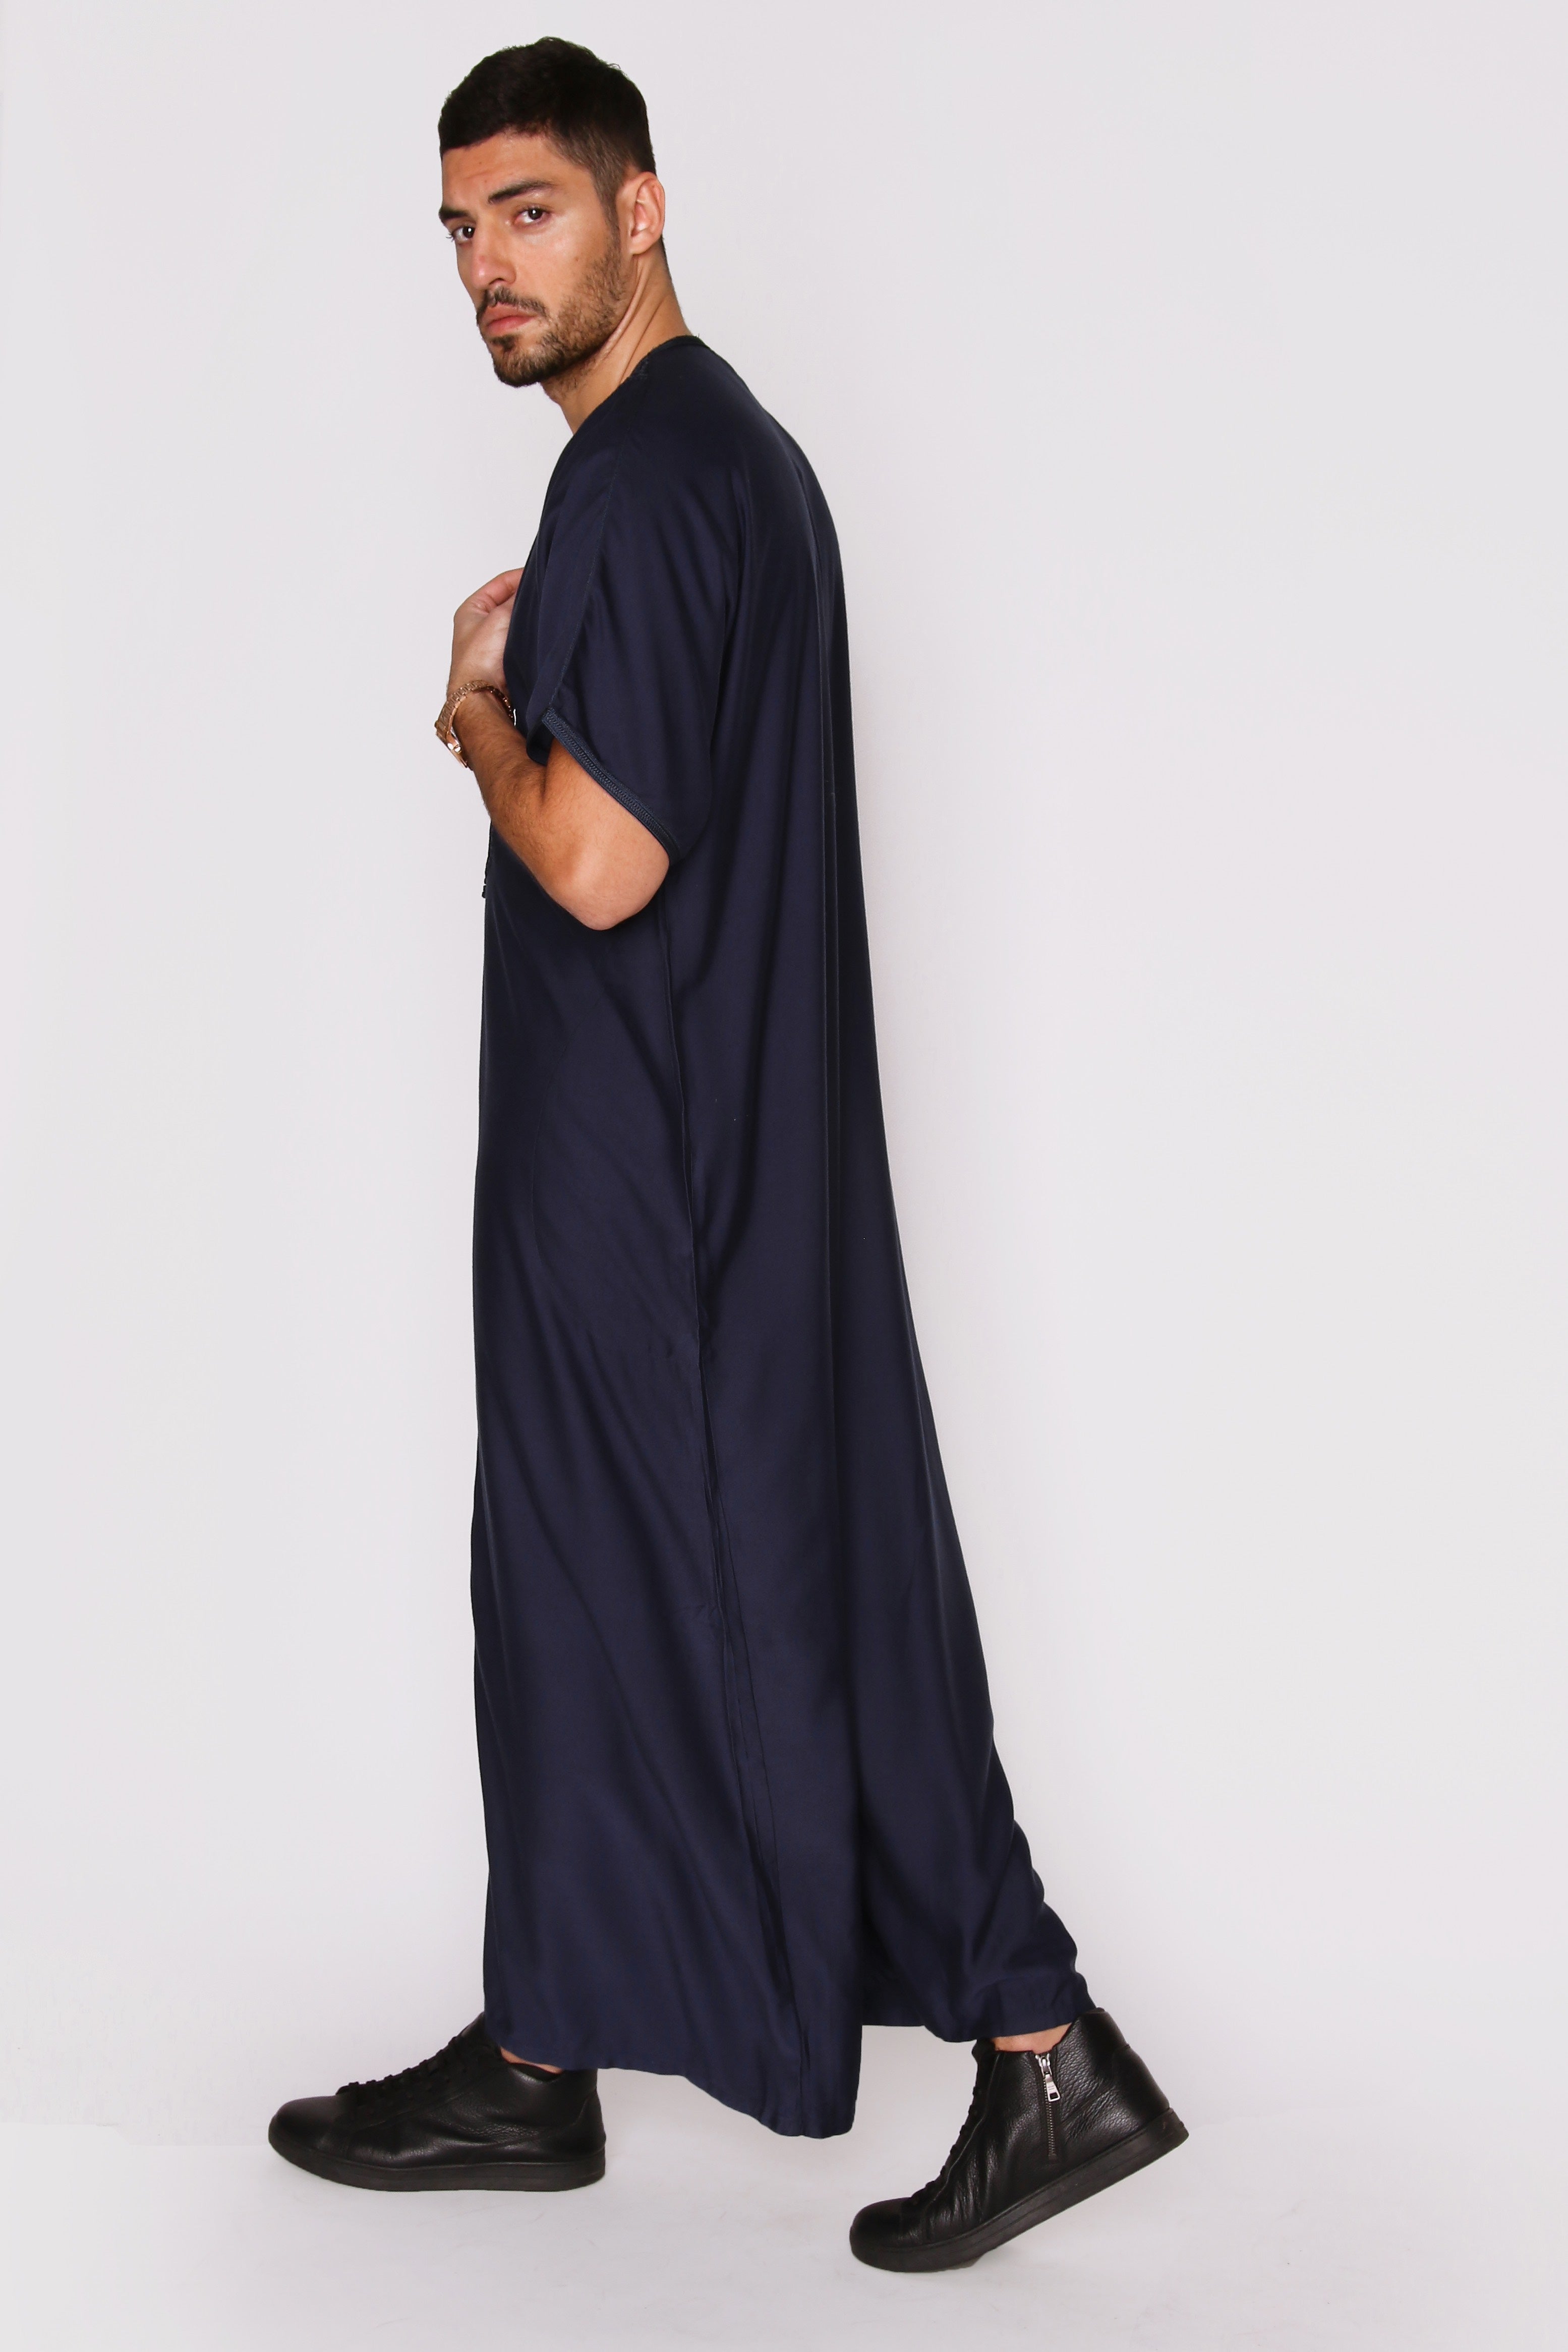 Gandoura Idriss Men's Embroidered Short Sleeve Full-Length Robe Thobe in Rich Deep Blue